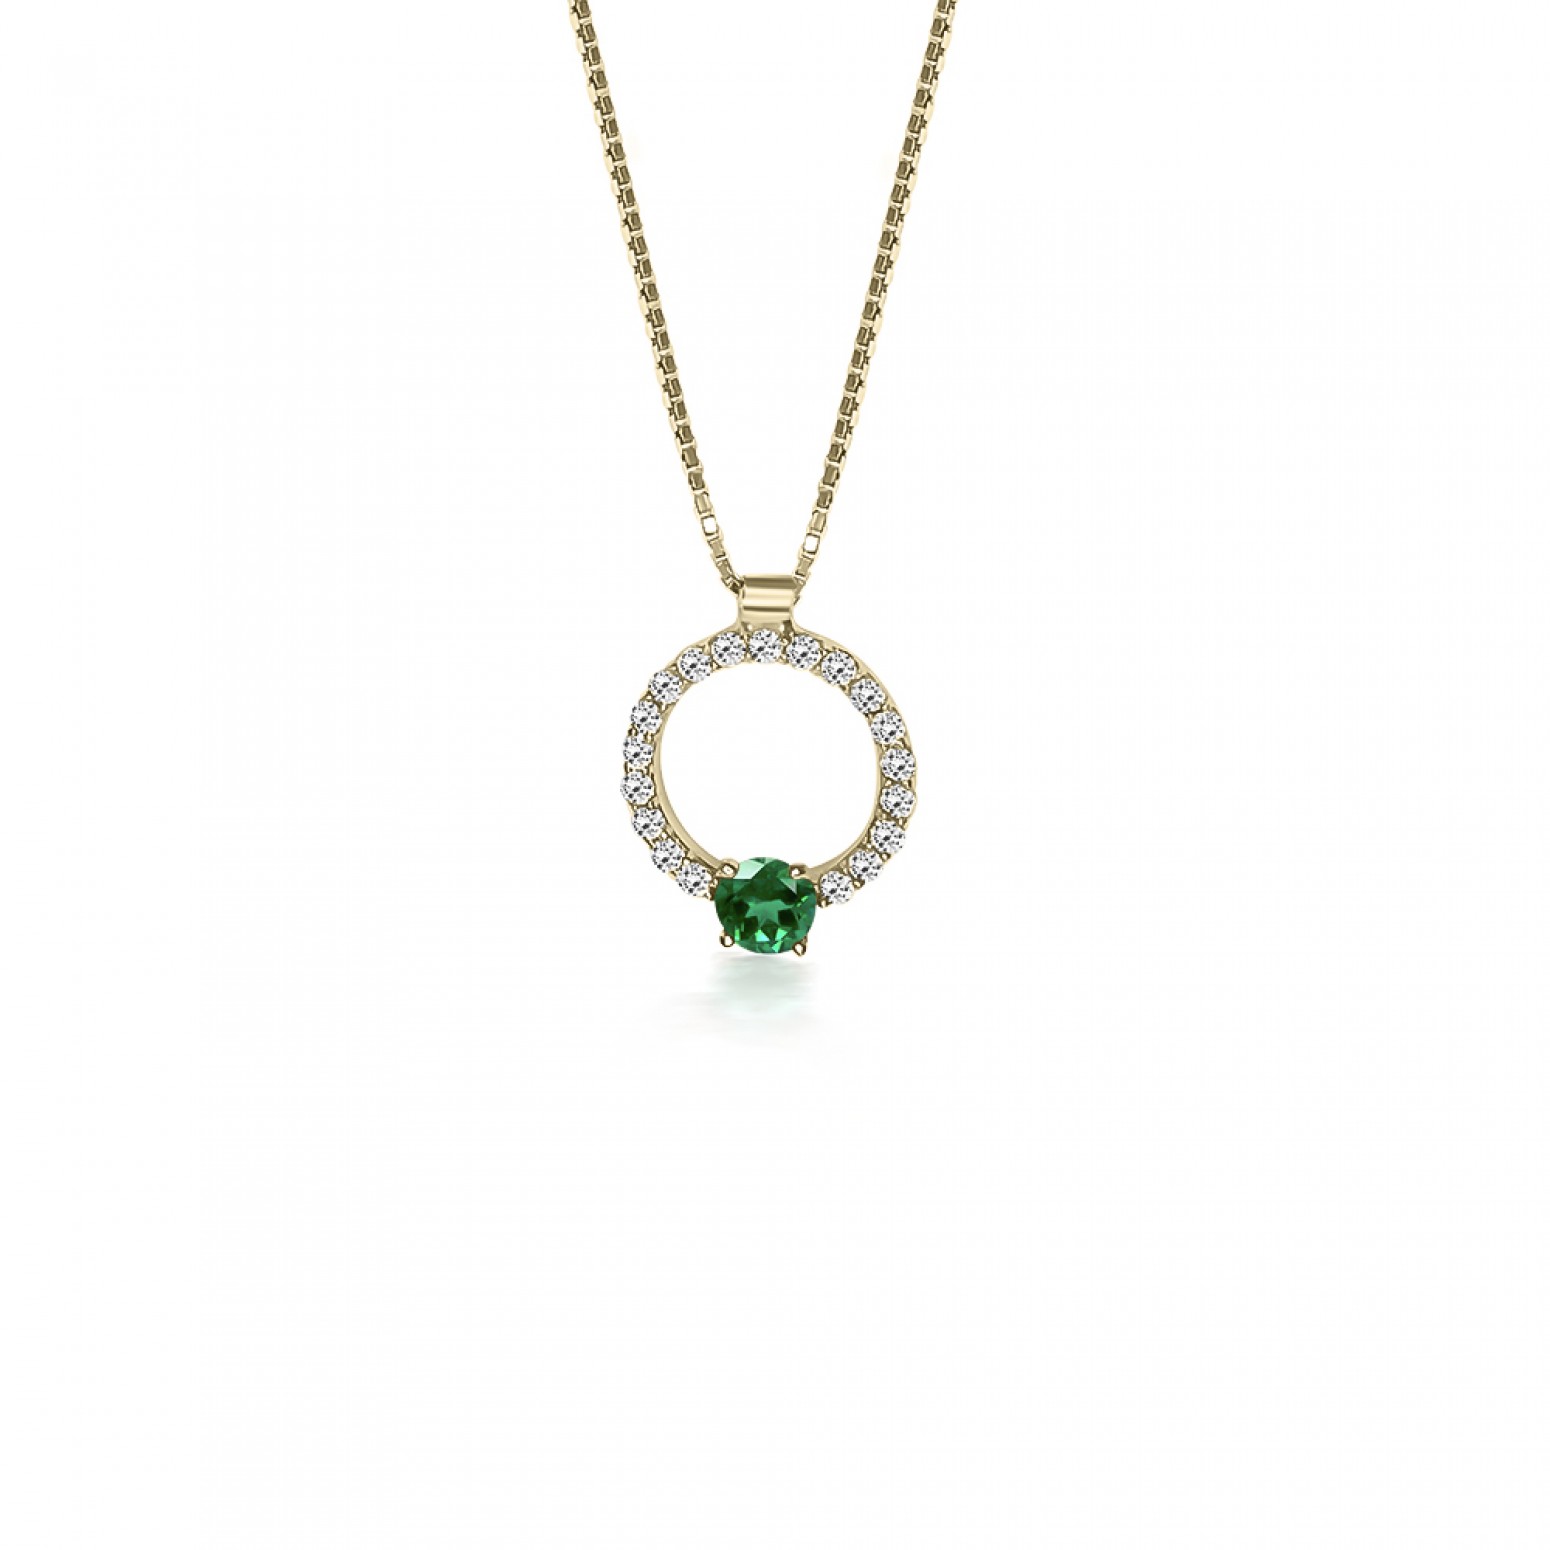 Round necklace, Κ14 gold with green and white zircon, ko5656 NECKLACES Κοσμηματα - chrilia.gr